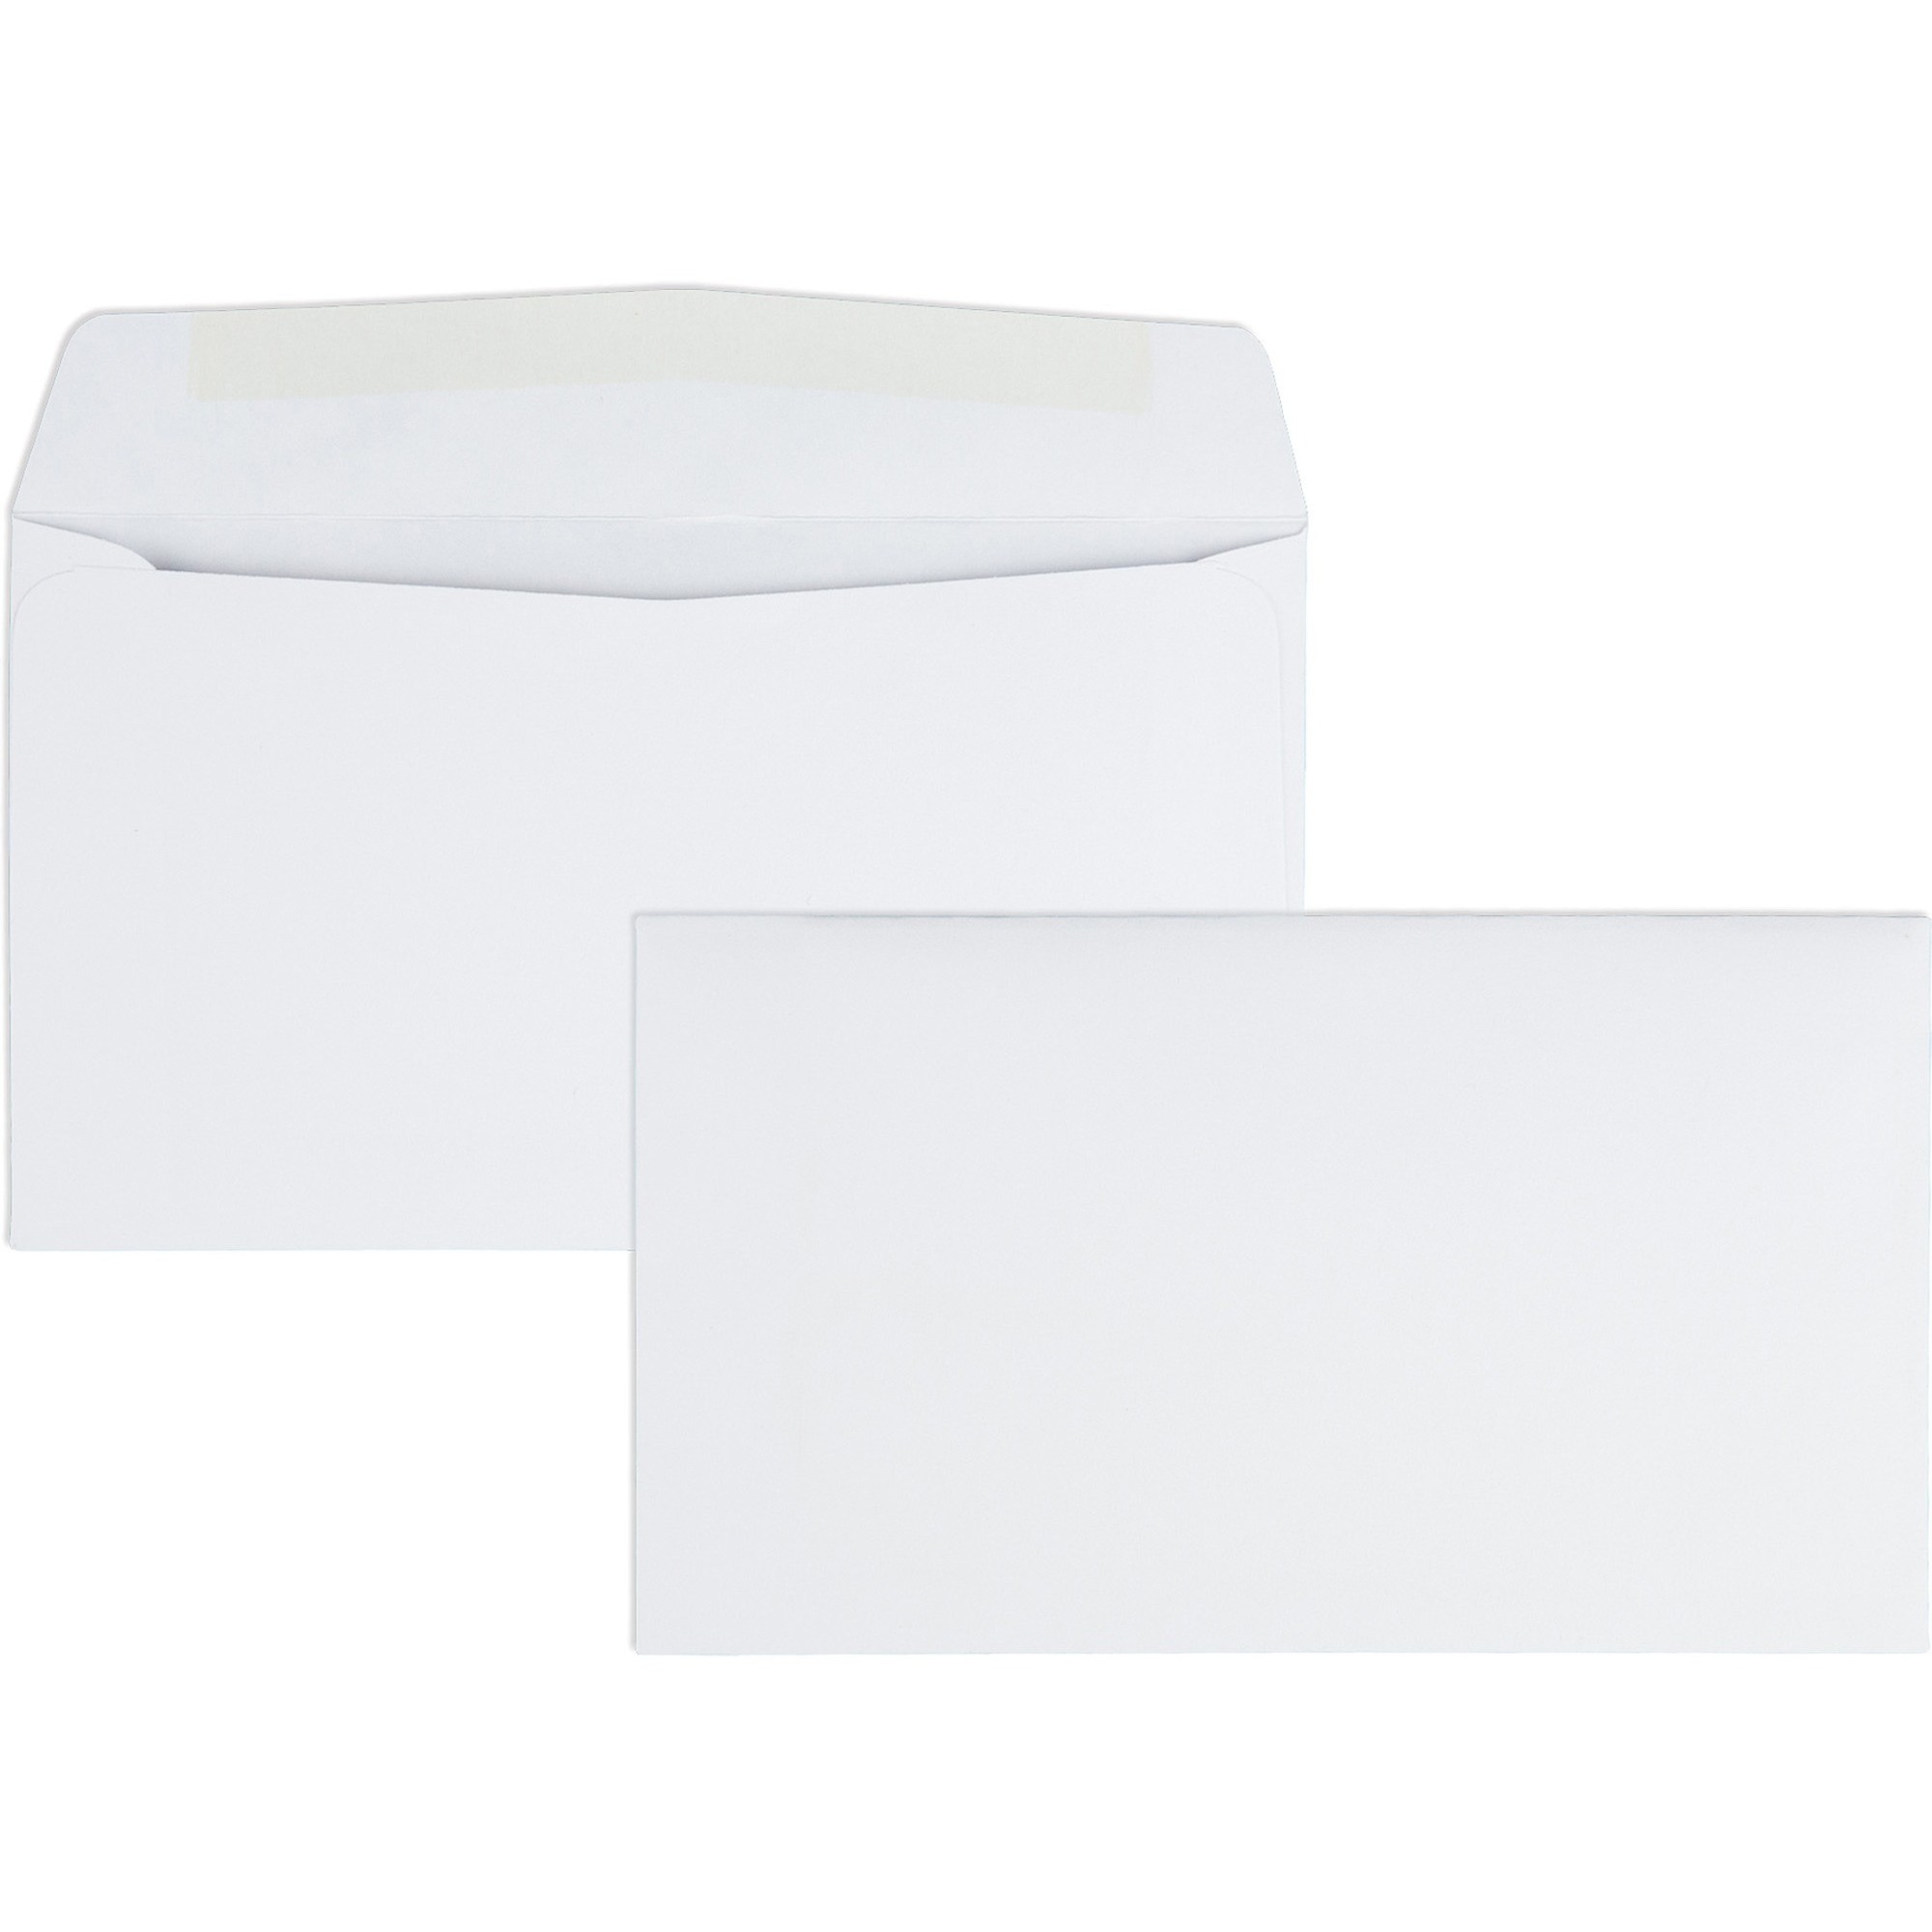 Quality Park Contemporary White Business Envelopes - Business - #6 3/4 - 3 5/8" Width x 6 1/2" Length - 24 lb - Gummed - Wove - 